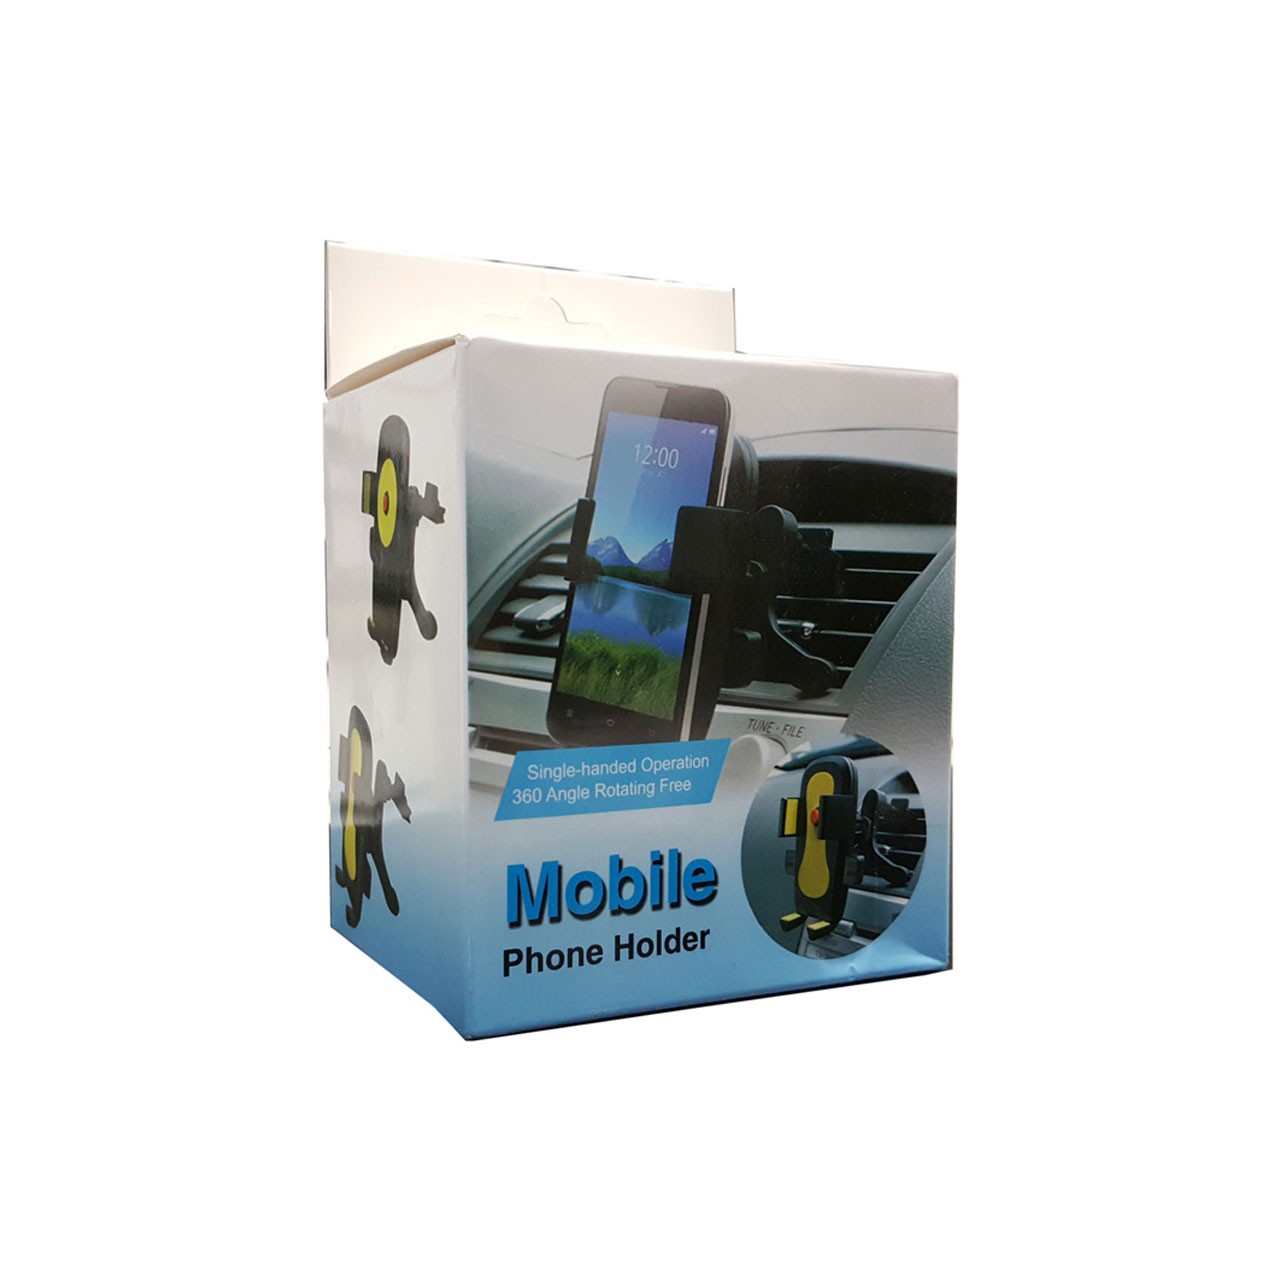 هولدر موبایل ضامن دار (Mobile Holder)